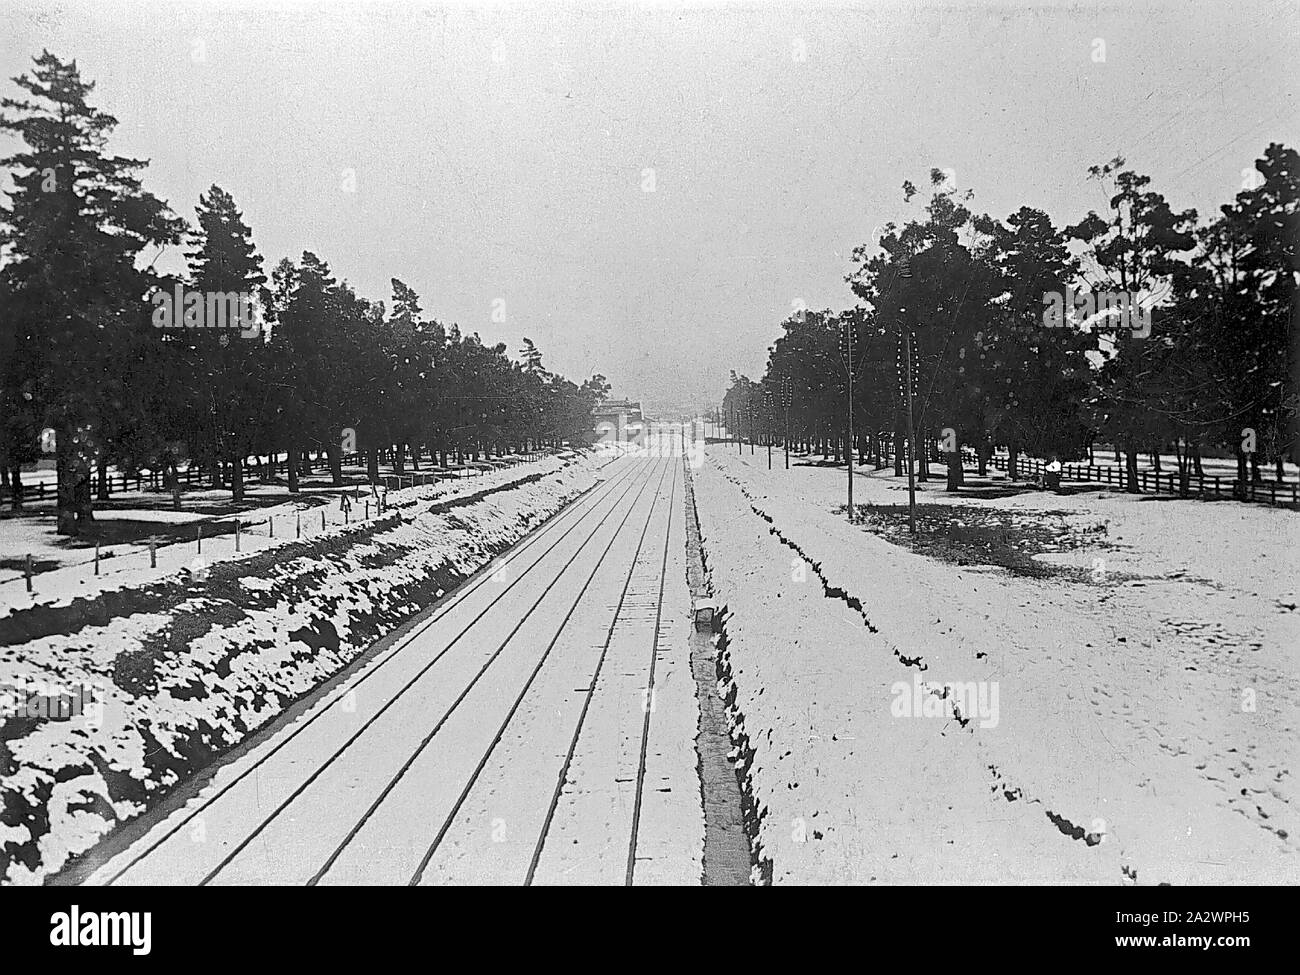 Negative - Ballarat, Victoria, Near Eureka Stockade Site, 1901, The railway line under snow on Christmas day, 1901. The Eureka Stockade is on the left, behind the houses Stock Photo